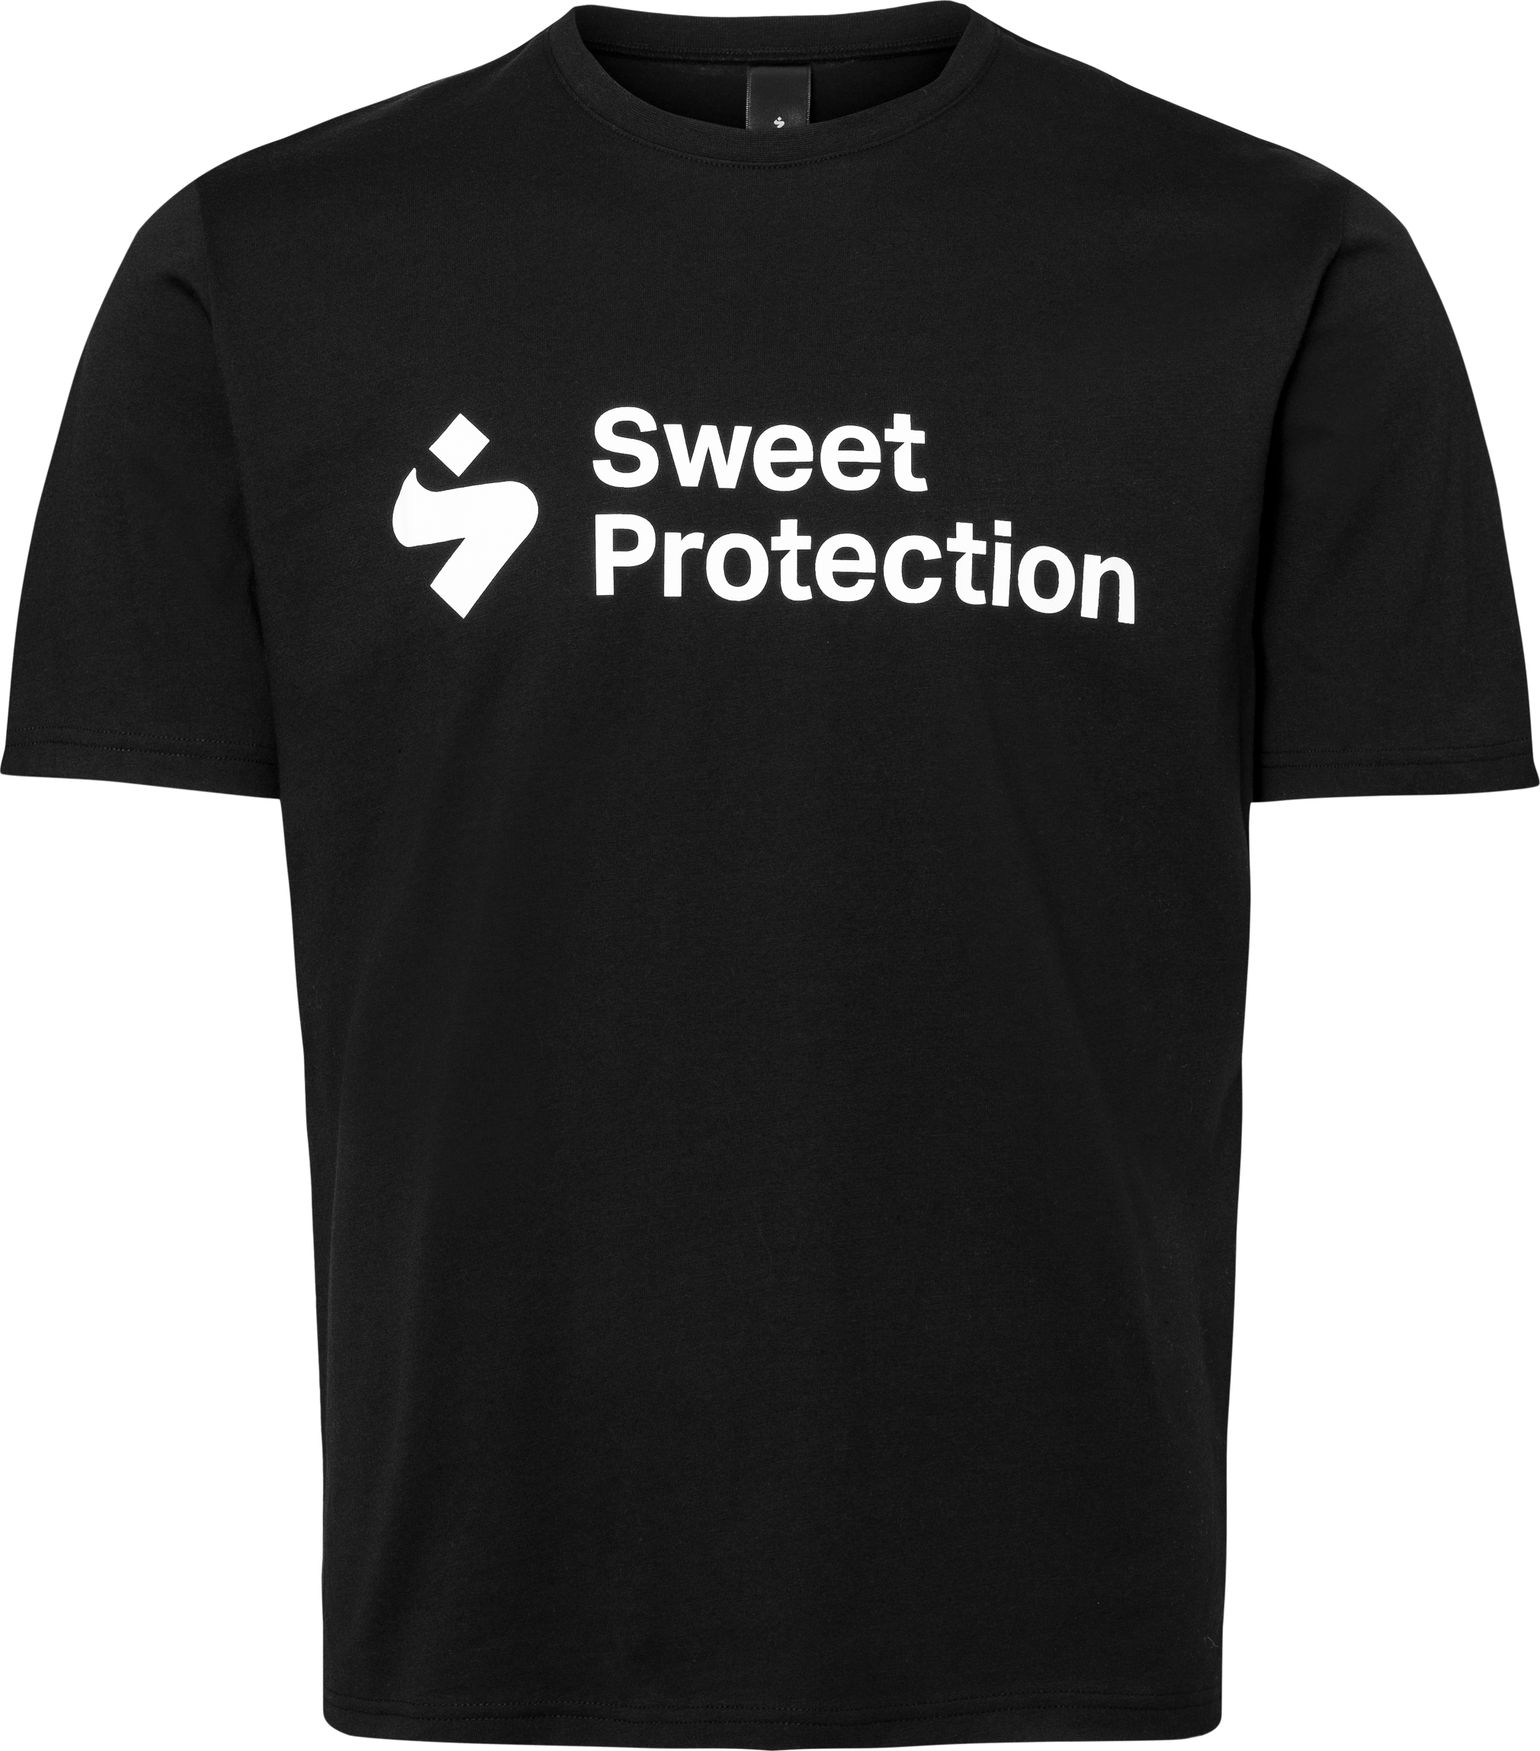 Sweet Protection Men's Sweet Tee Black